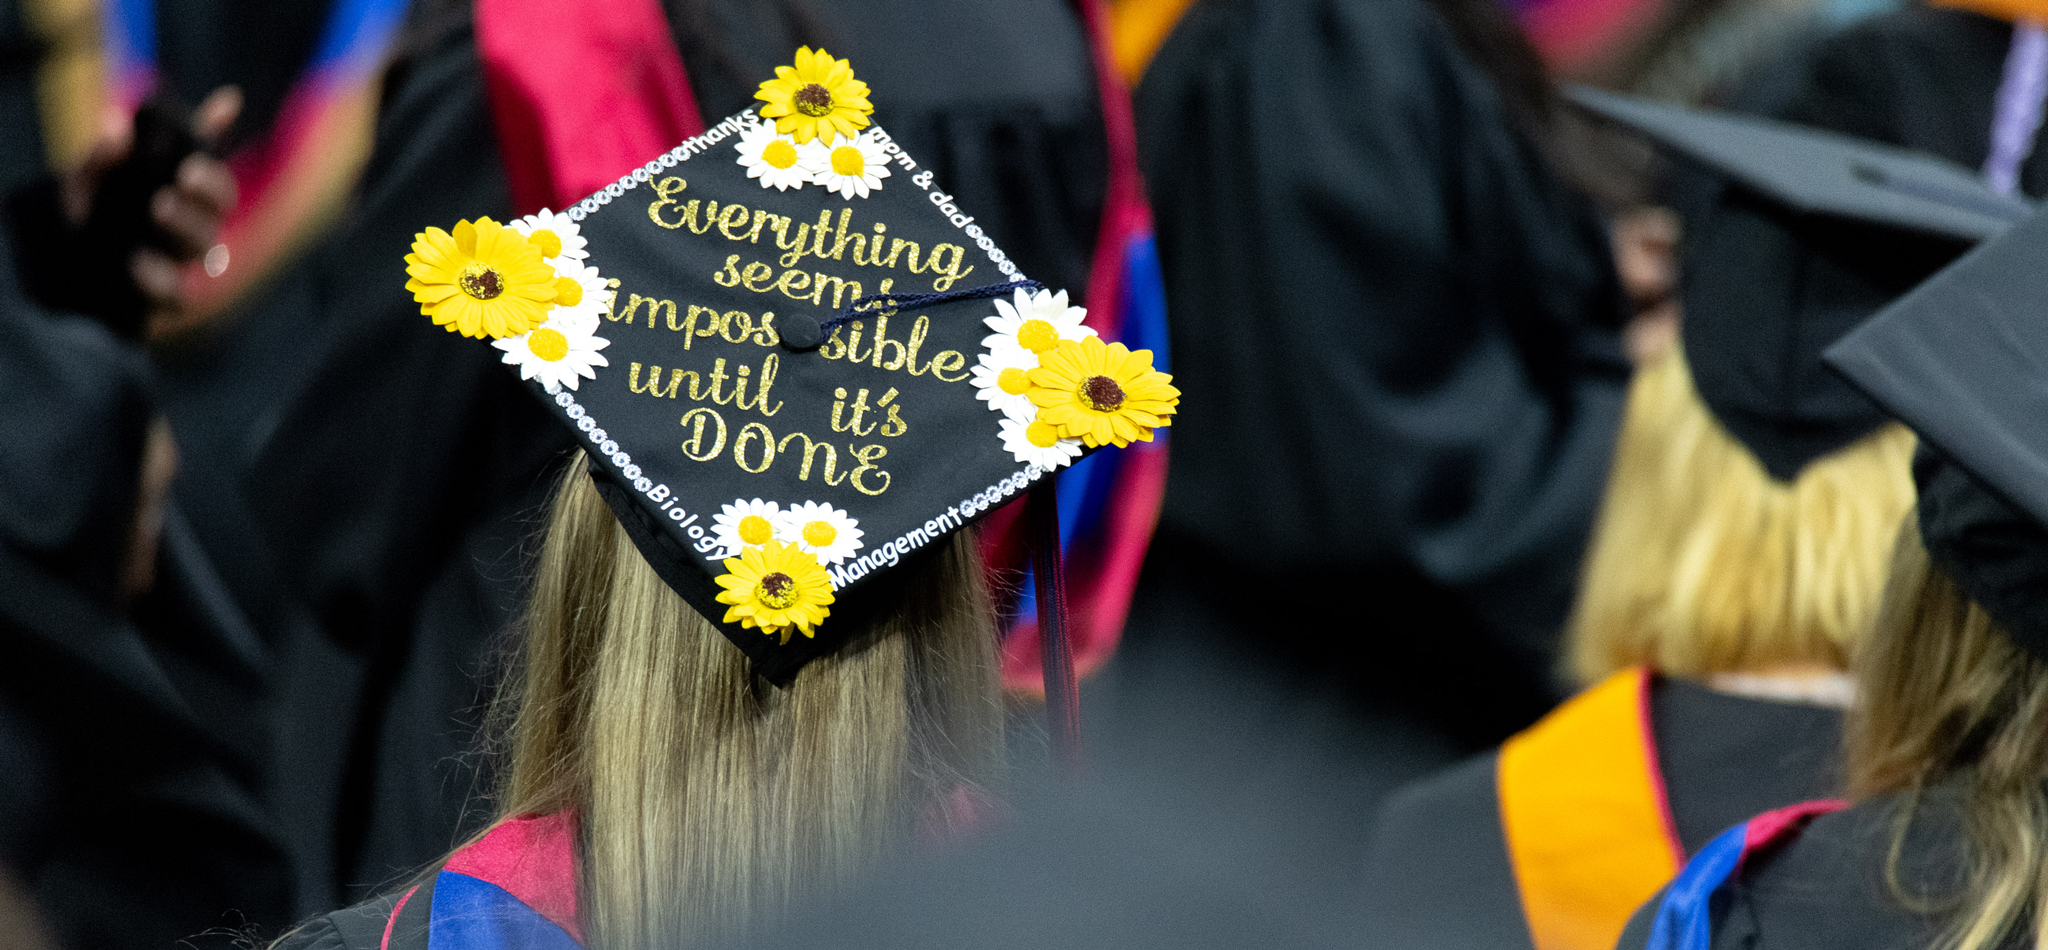 DeSales University students graduation cap